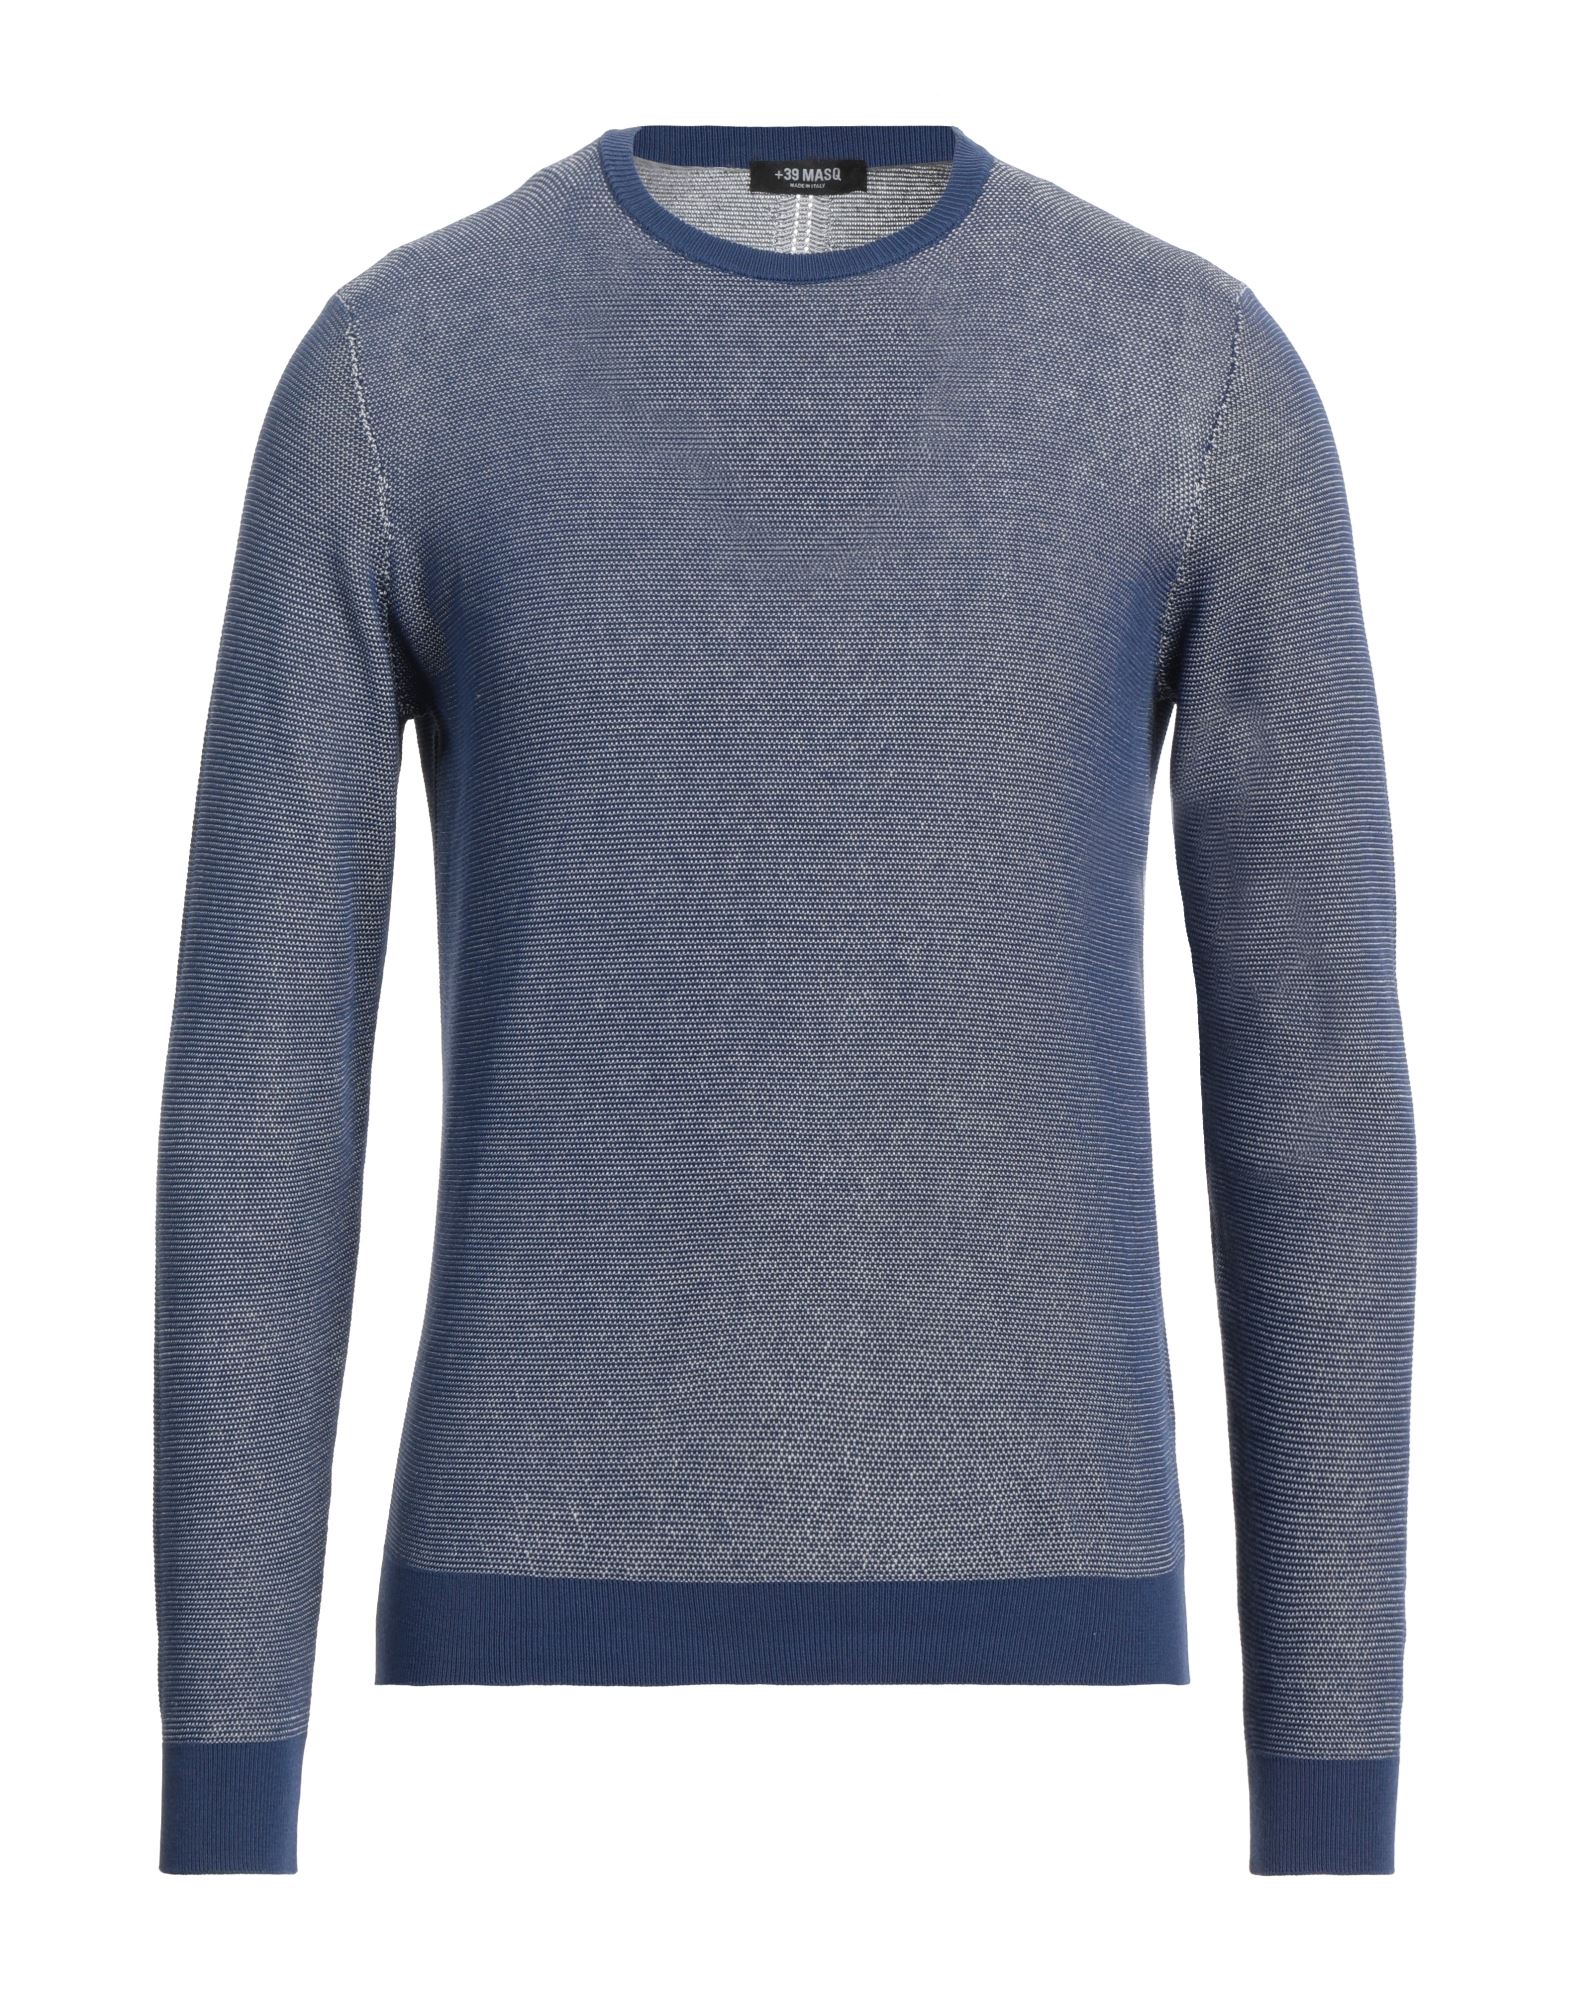 +39 Masq Man Sweater Midnight Blue Size M Cotton